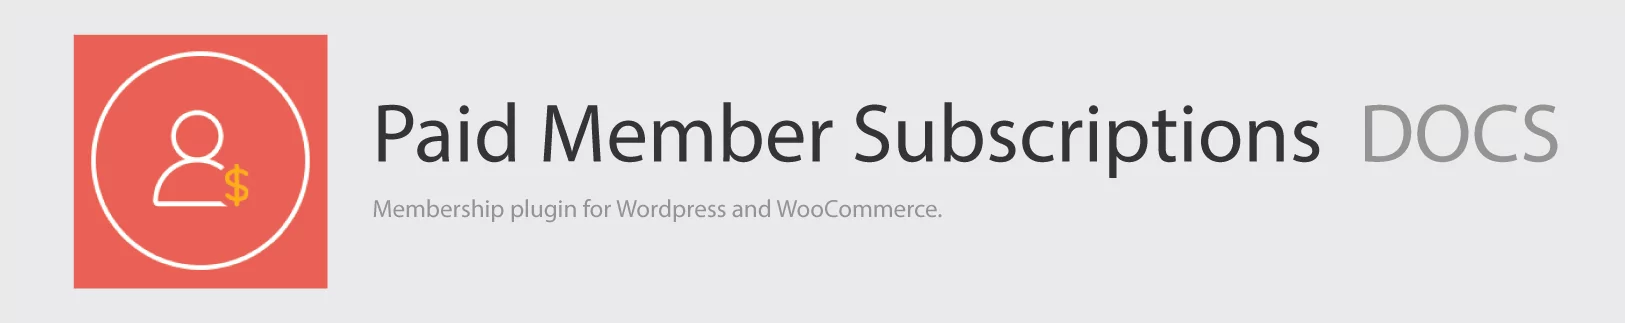 Paid Member Subscriptions Docs Logo v2